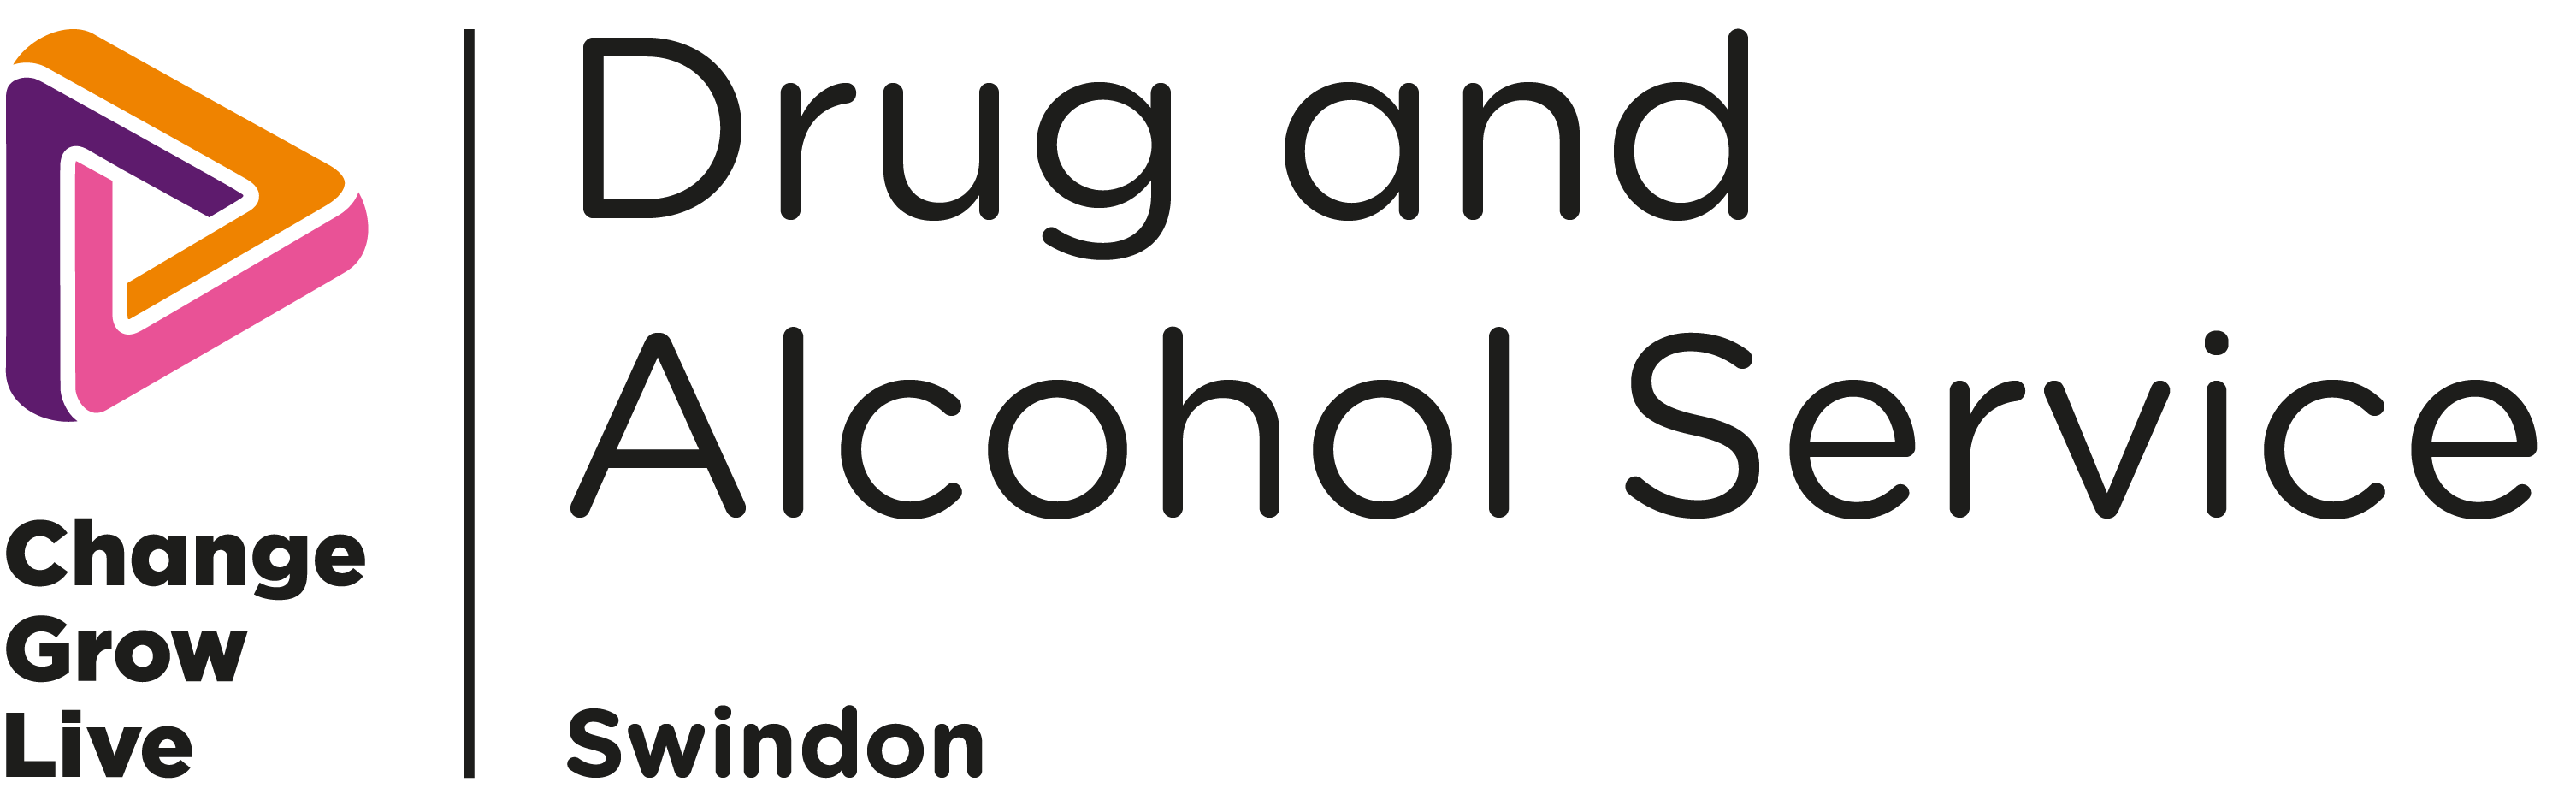 The Drug and Alcohol Service - Swindon Service logo